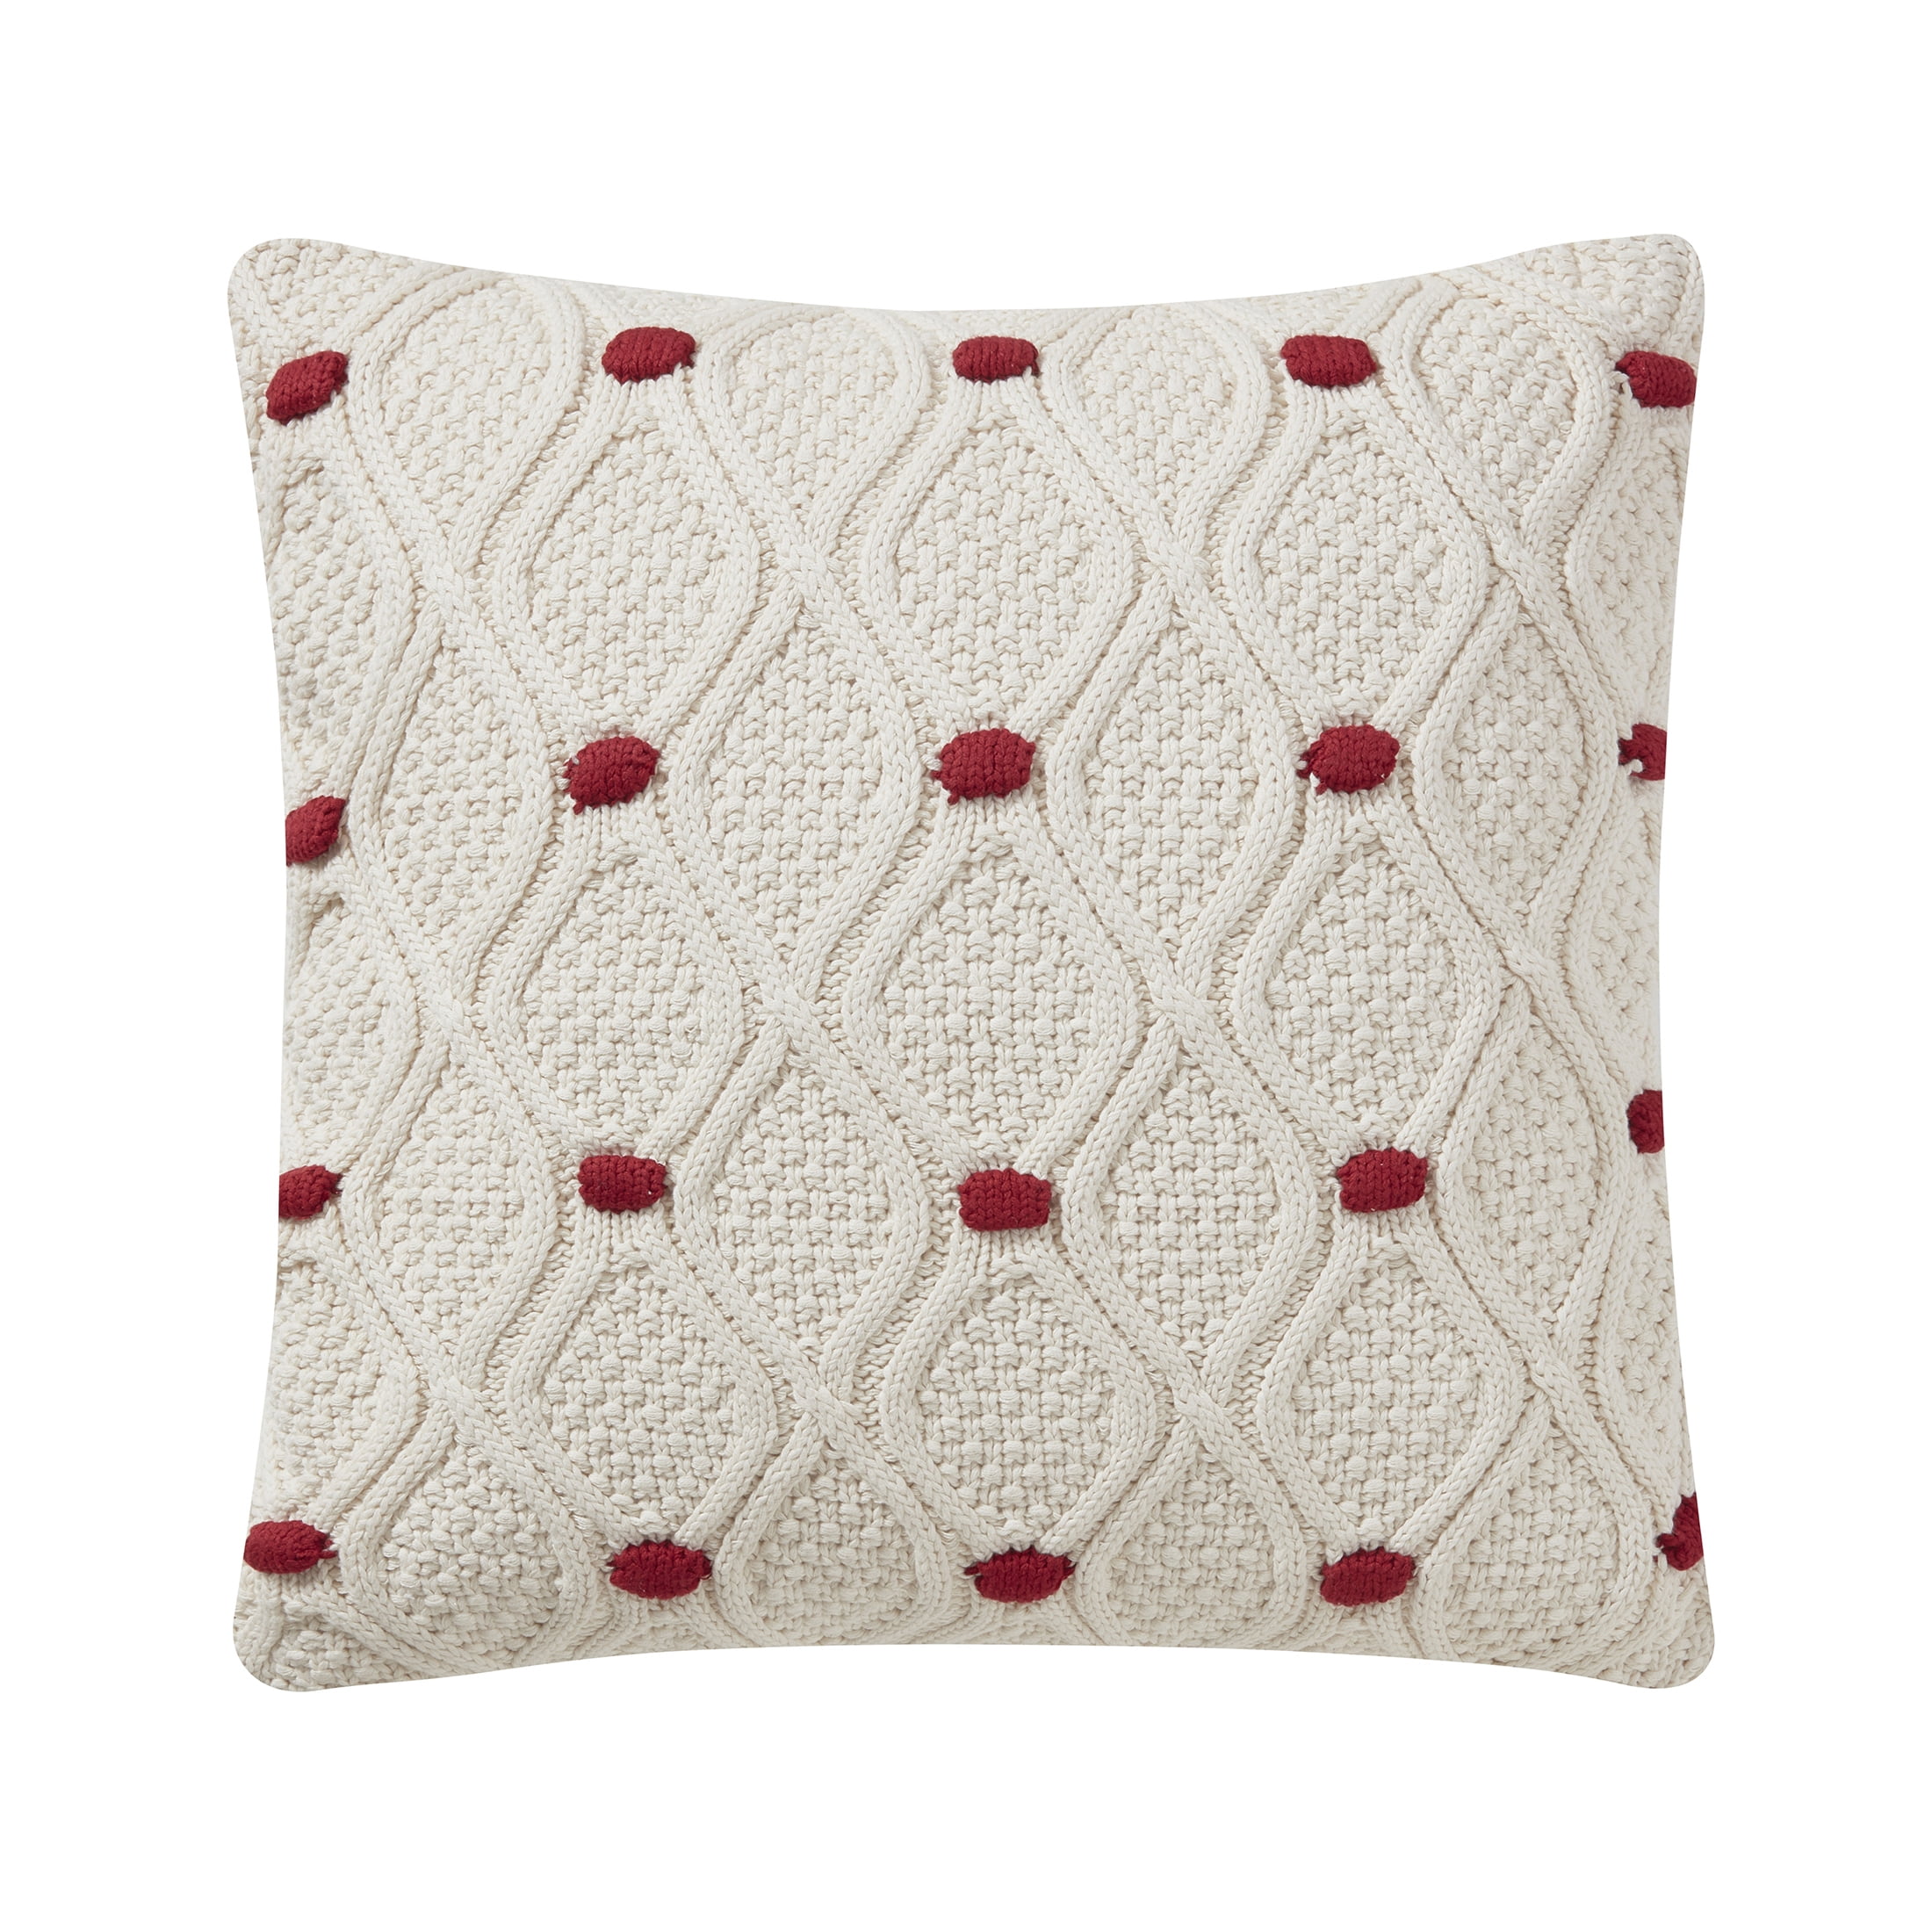 Tribal Fluffy Throw Pillow Cushion Cover, Maya Inspired Horizontal